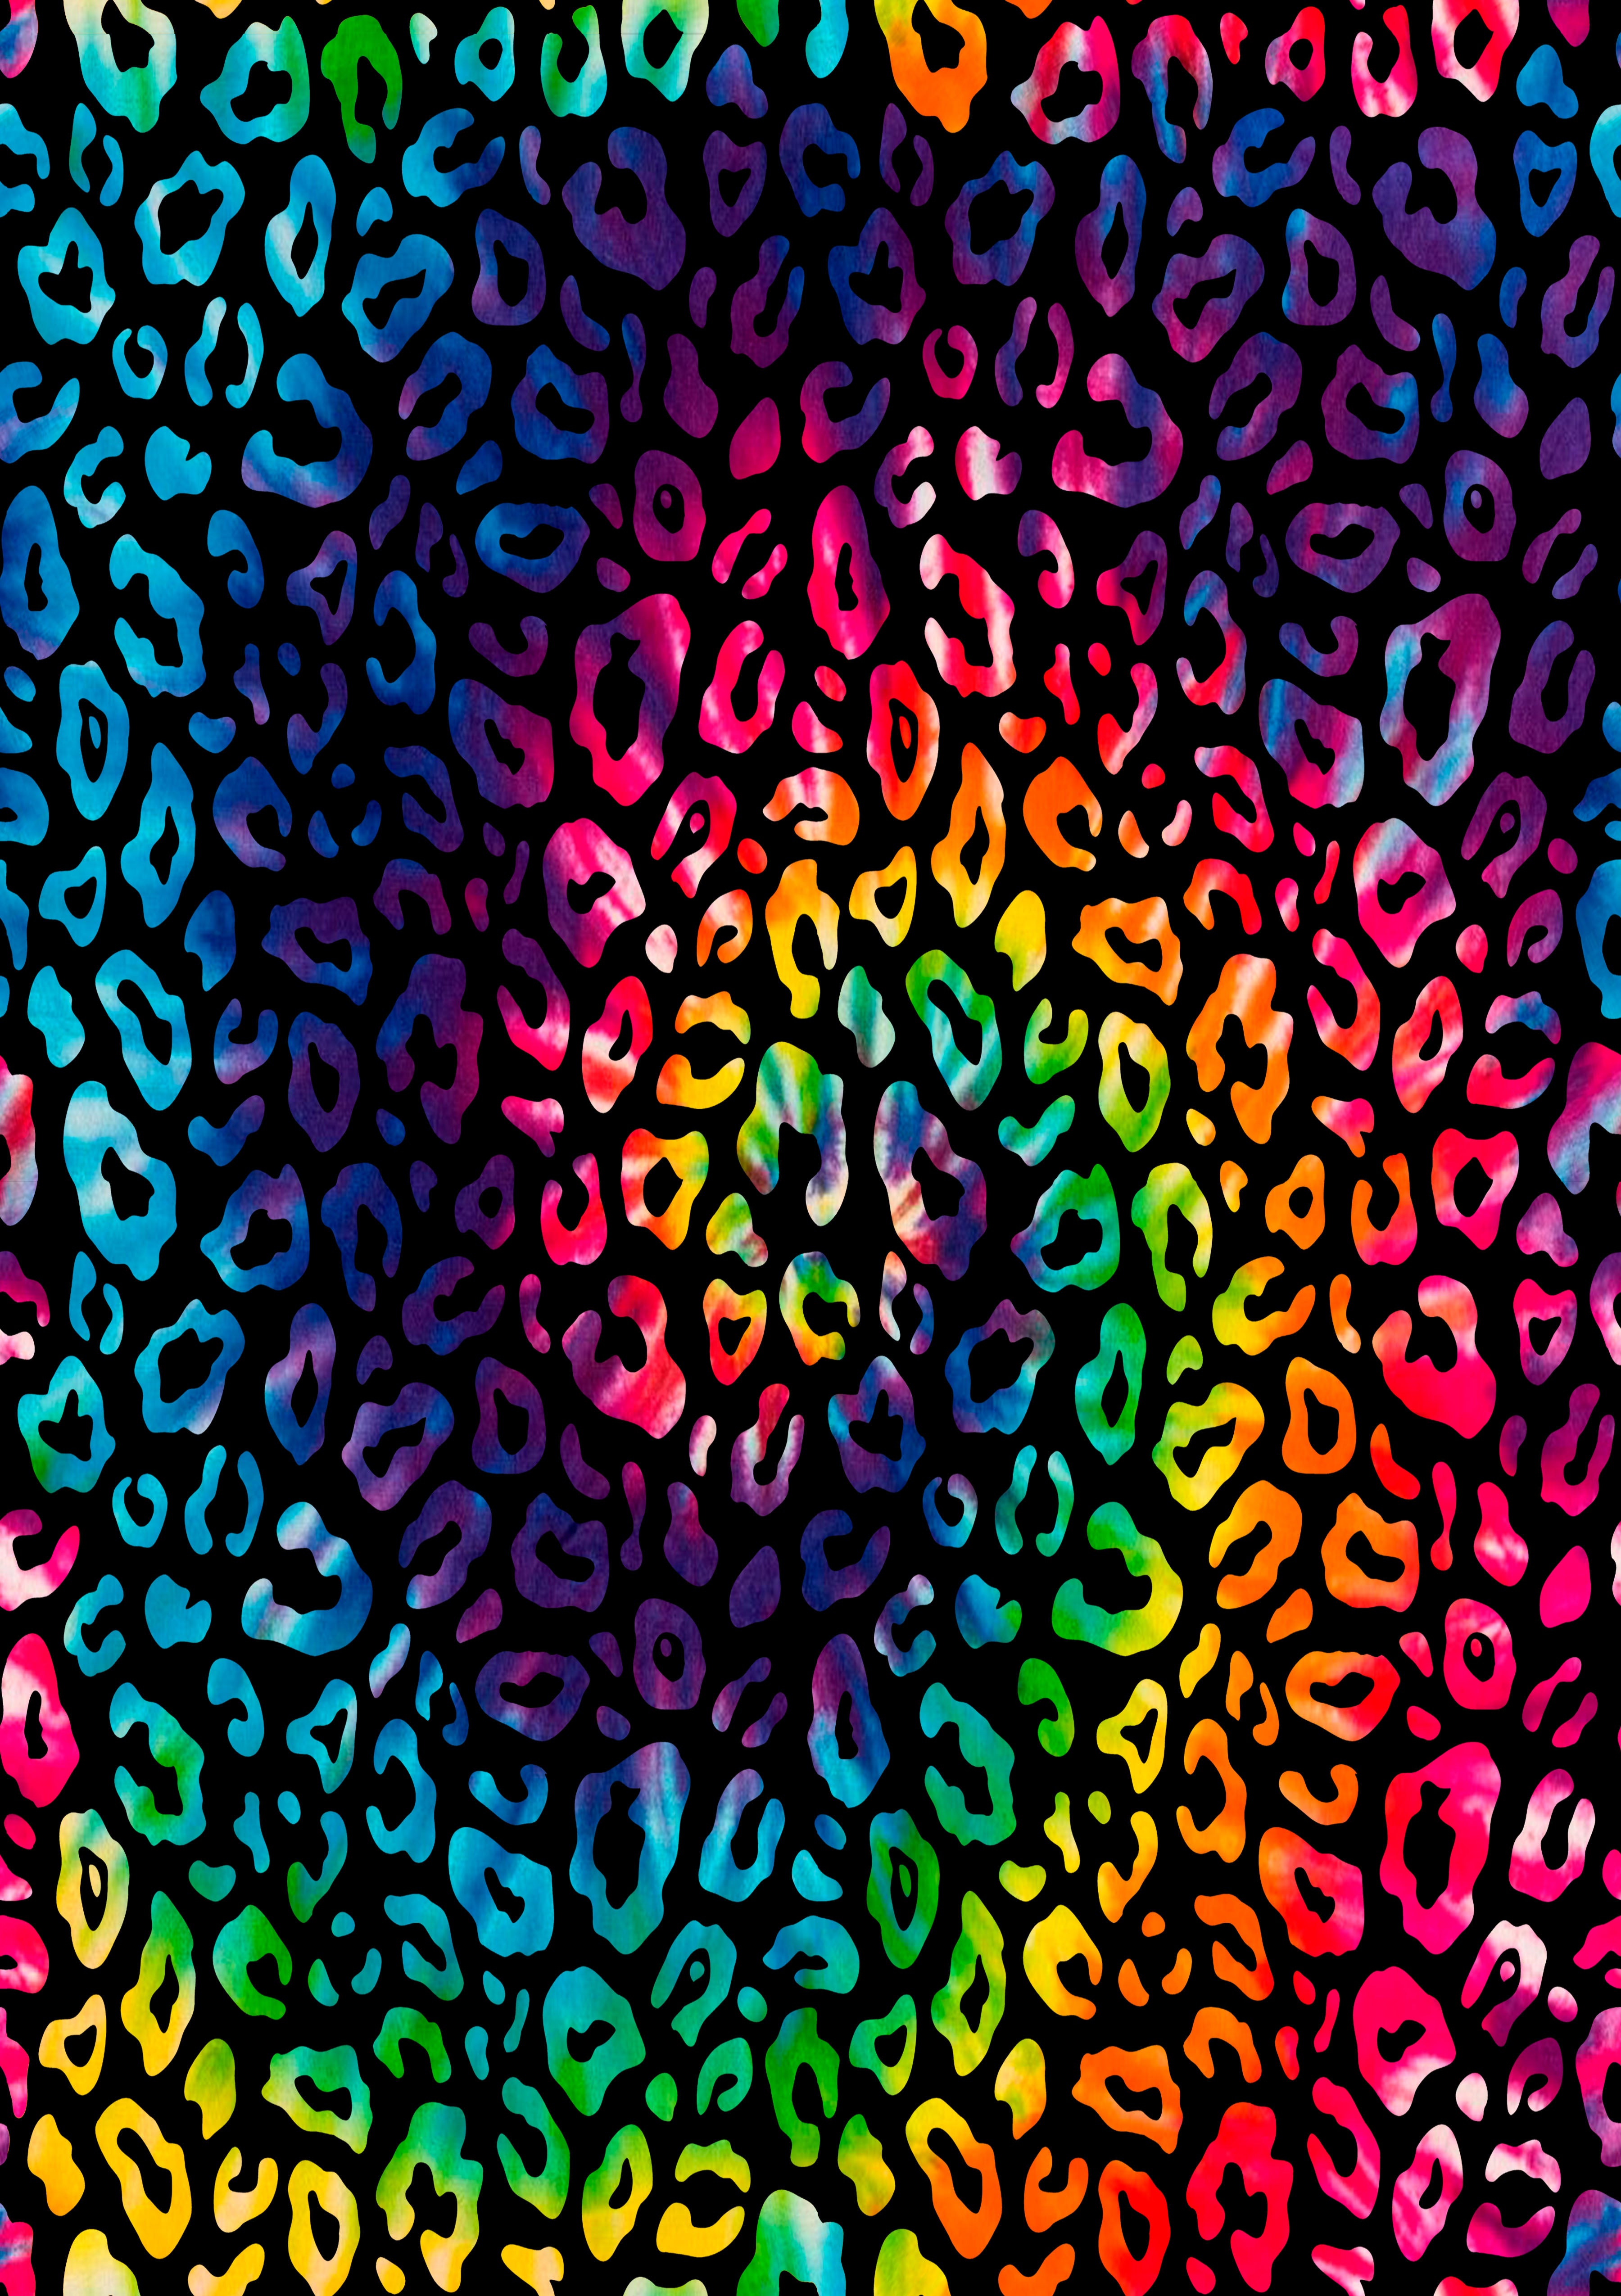 6 in. Rainbow Cheetah Print Ball - Pack of 12